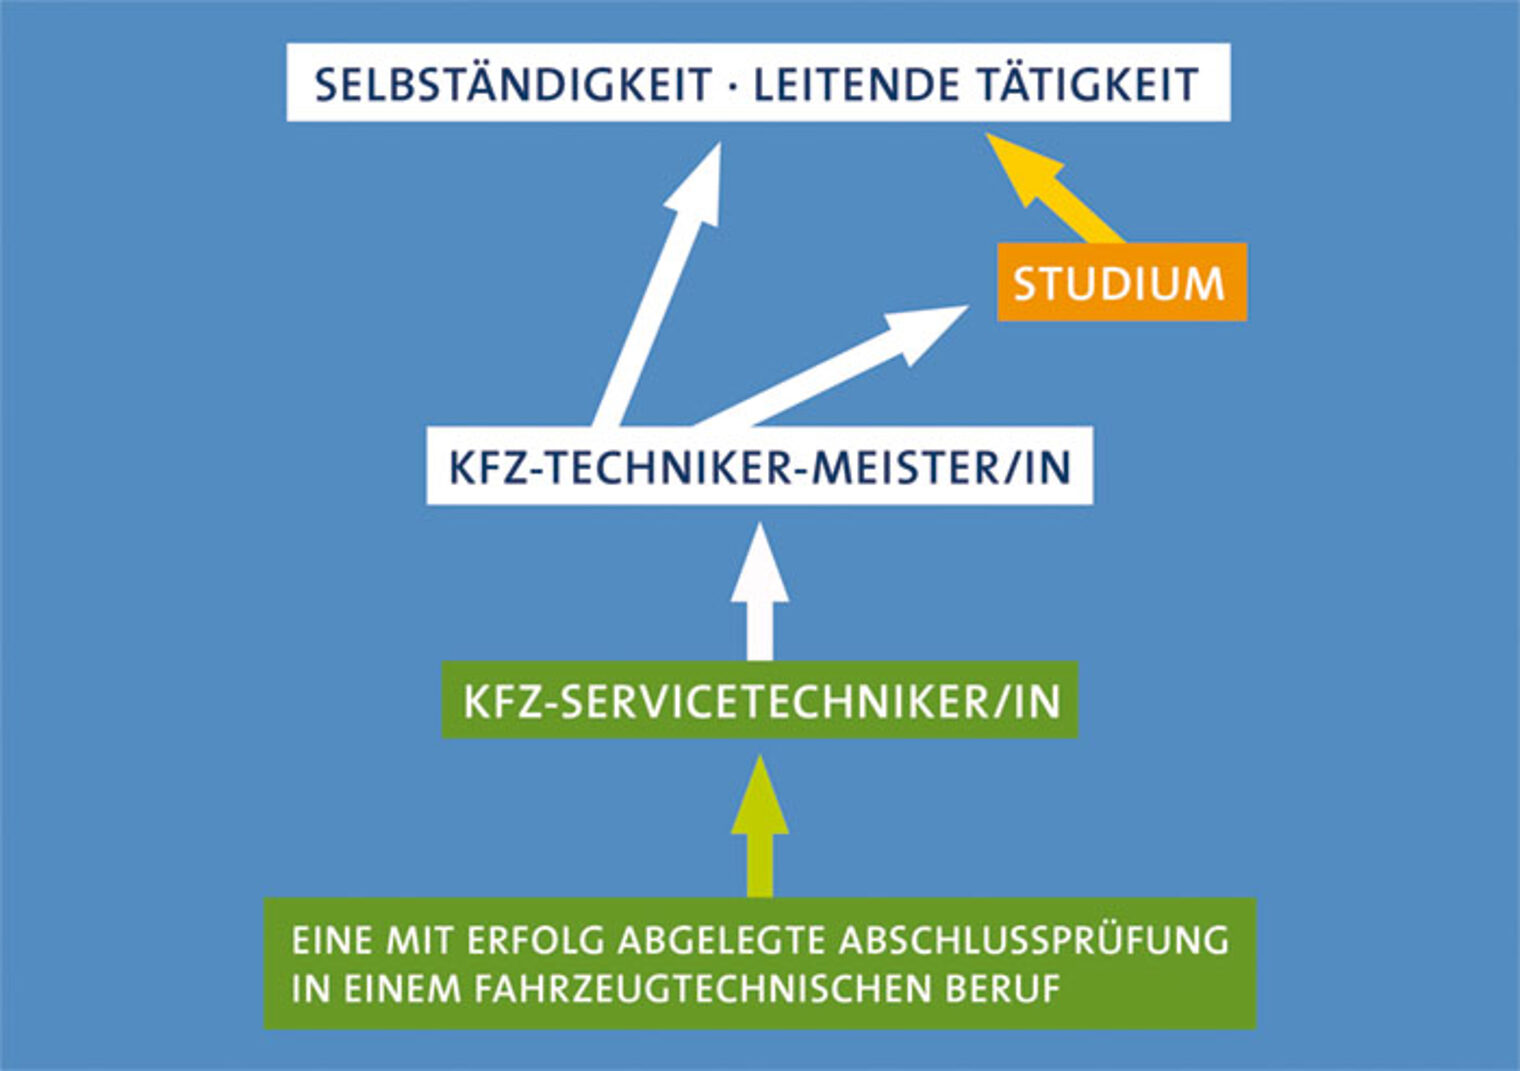 Kfz-Servicetechniker Karriereweg